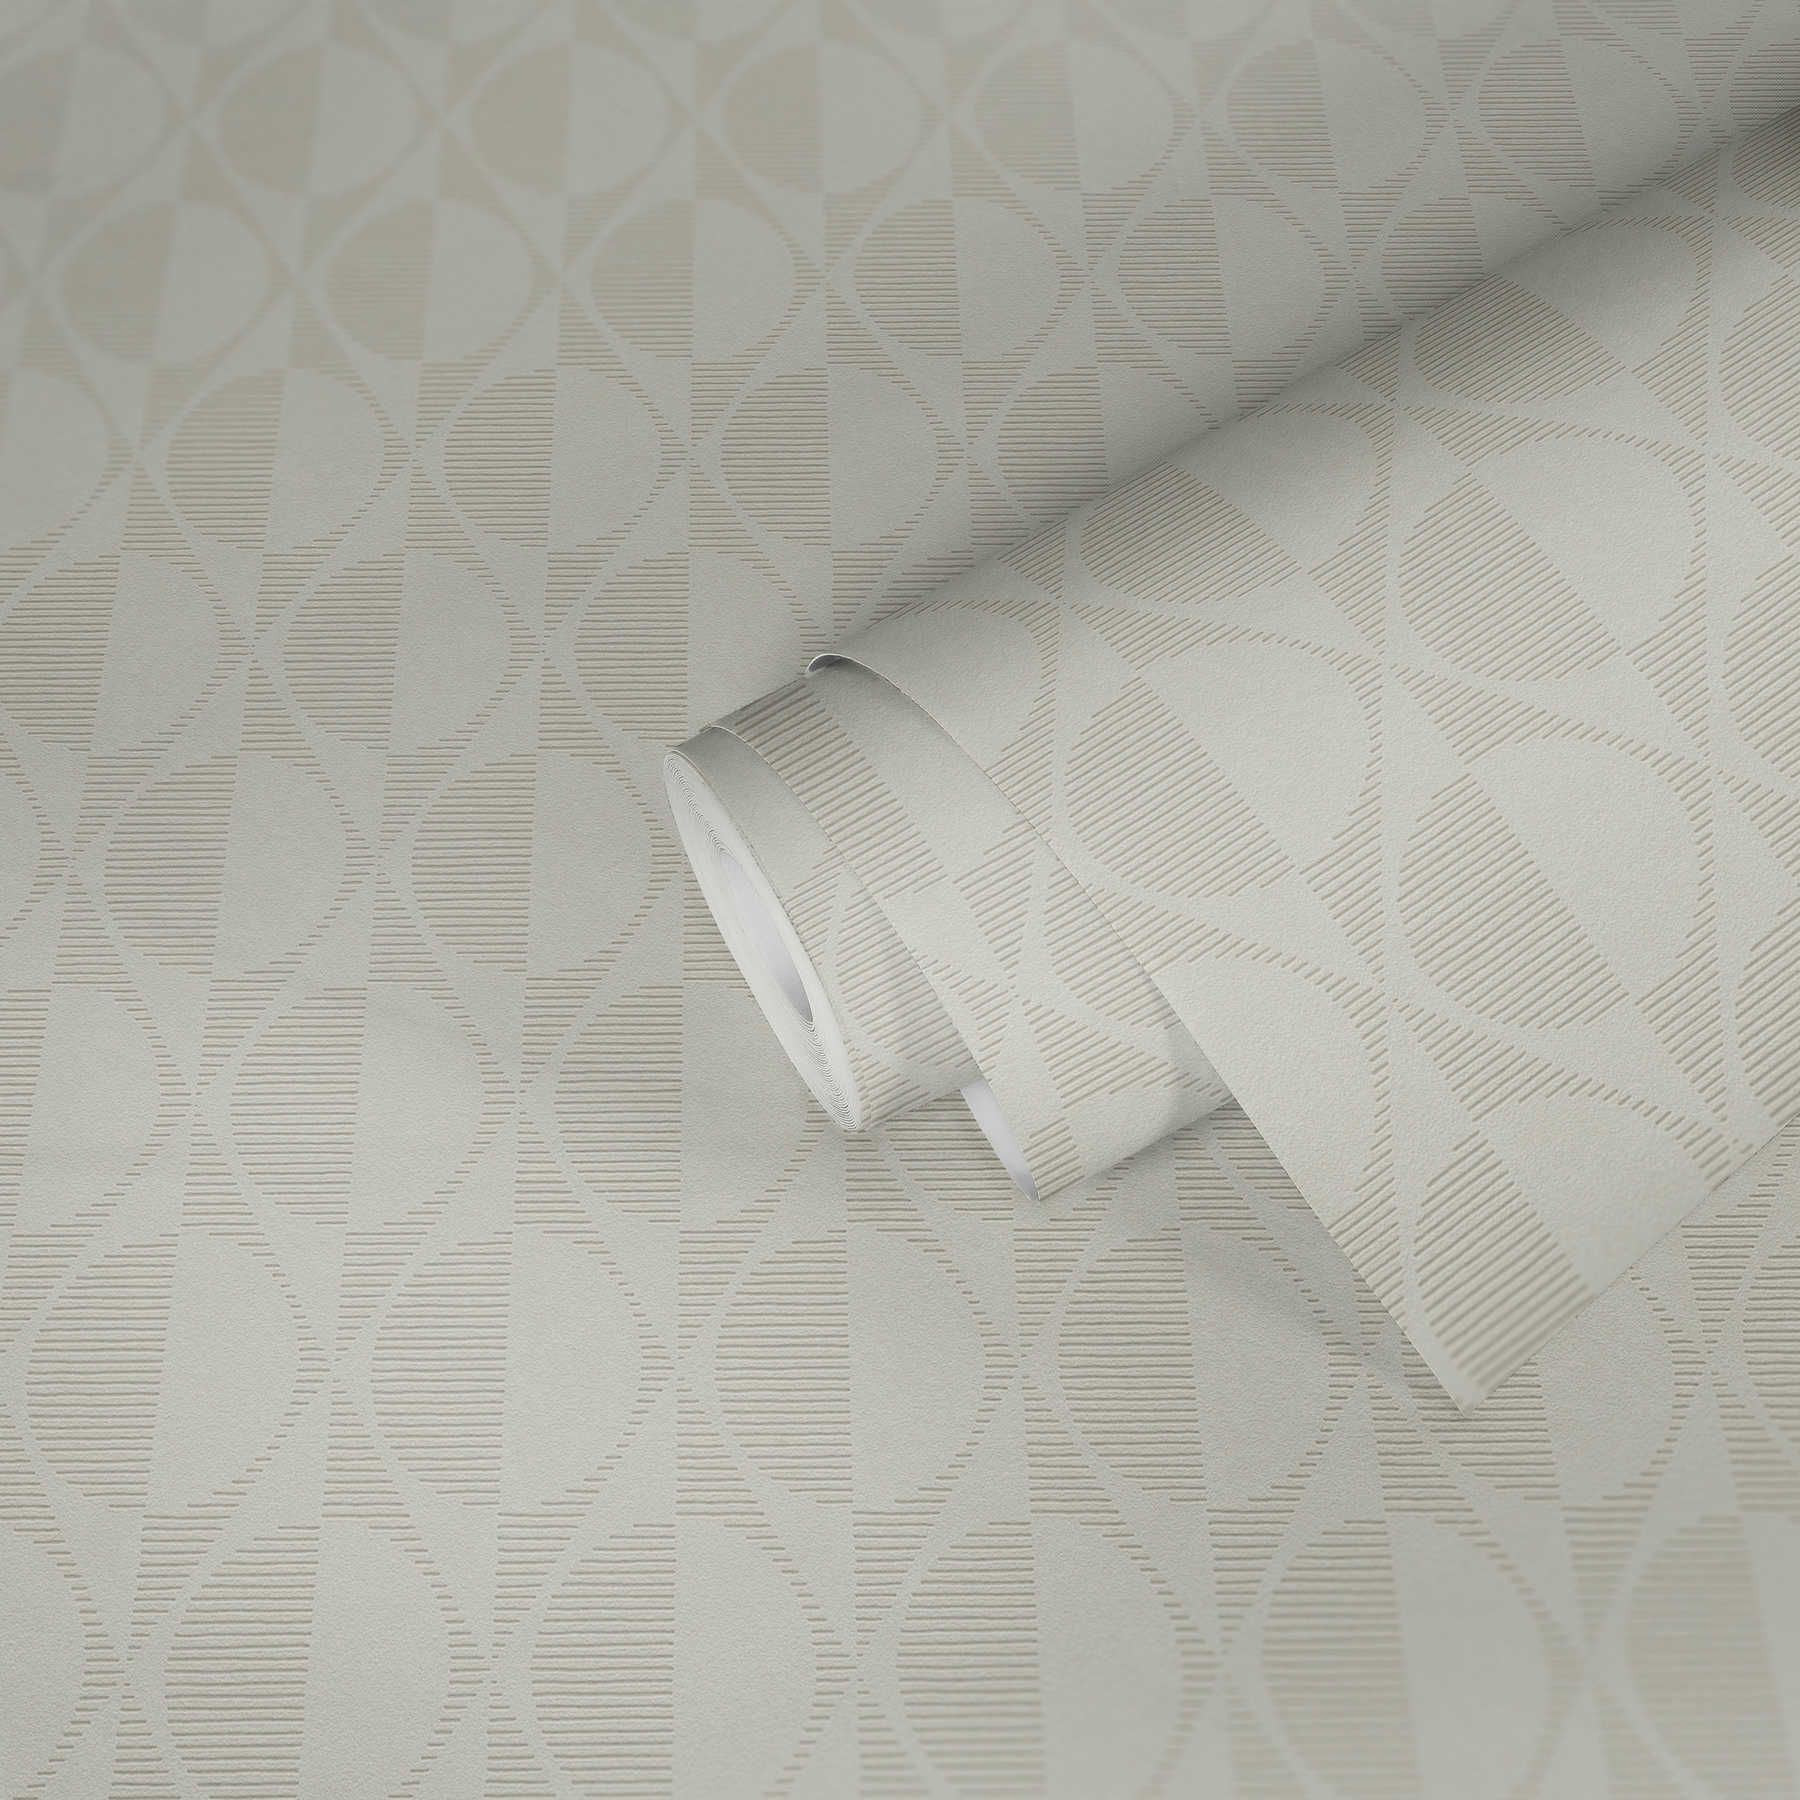             Retro wallpaper with circle and diamond pattern - cream, beige
        